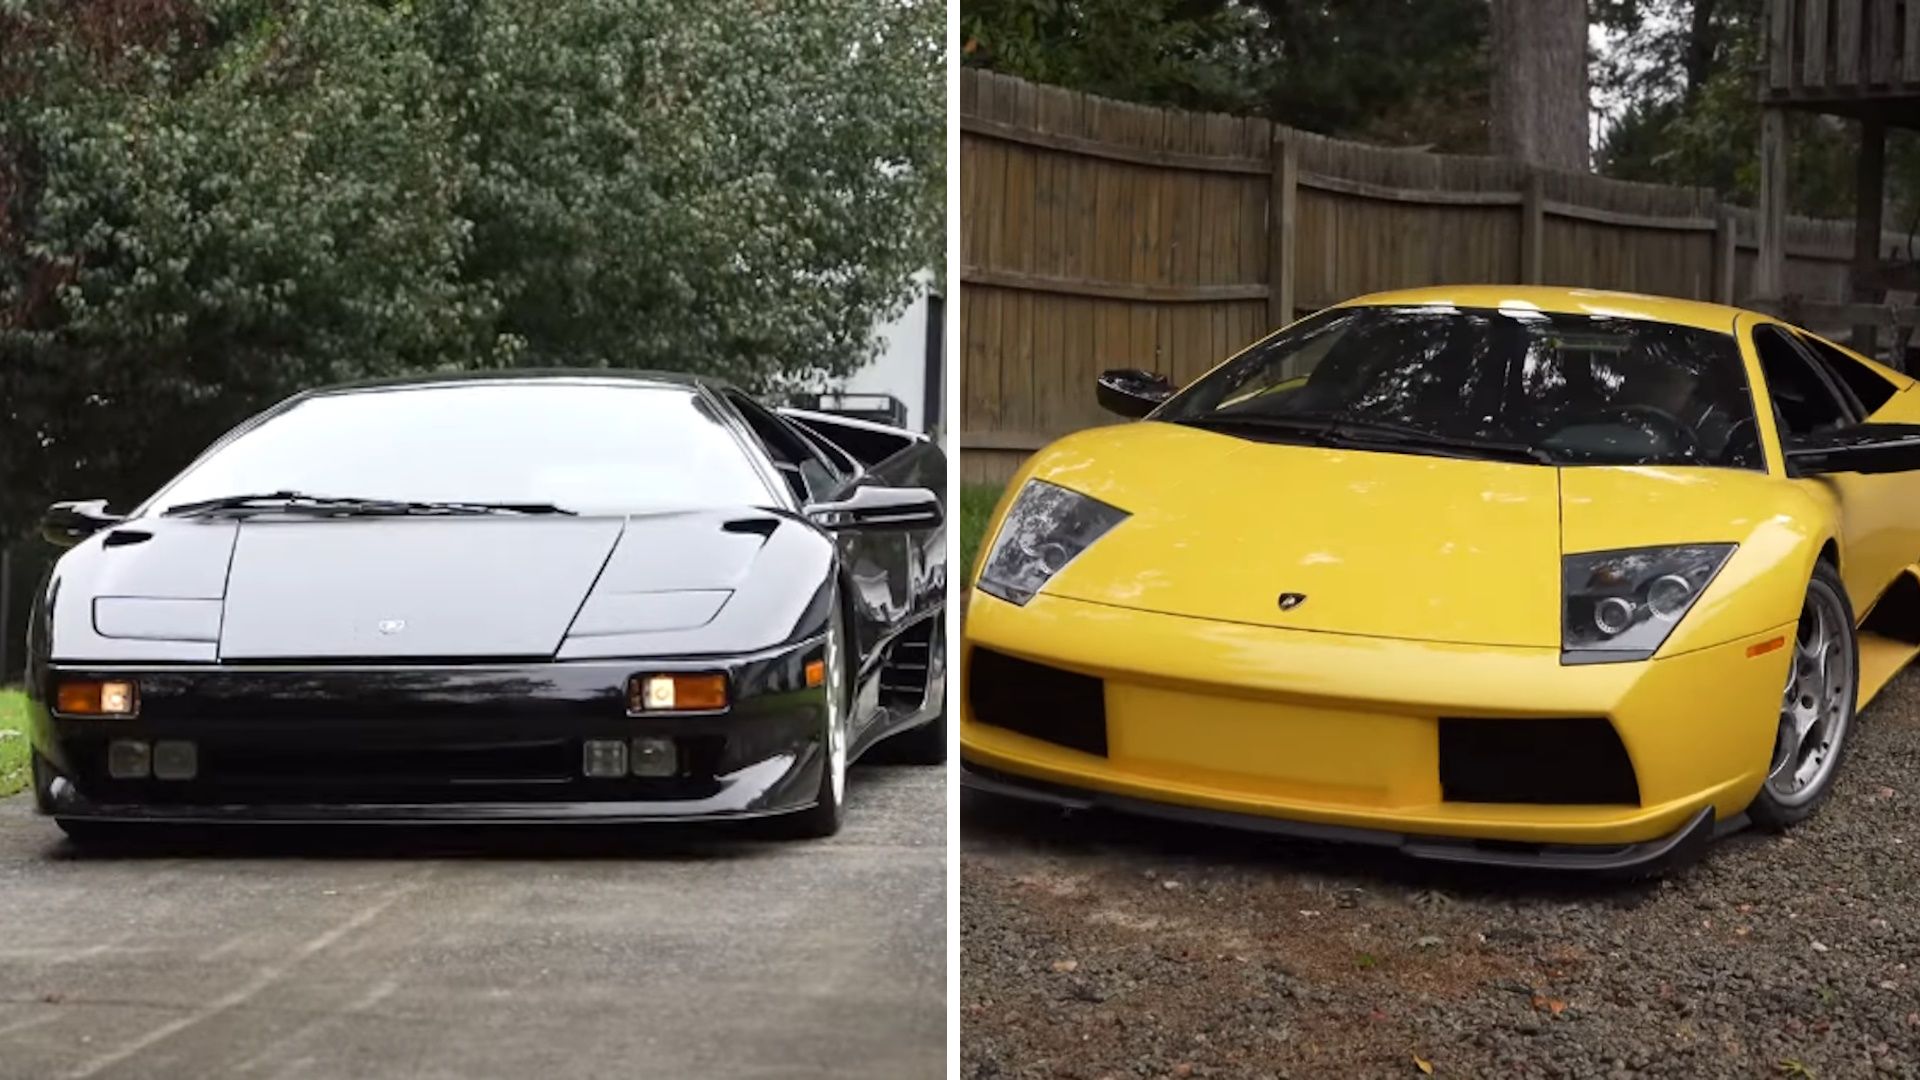 A black 1991 Lamborghini Diable and a yellow 2004 Lamborghini Murcielago